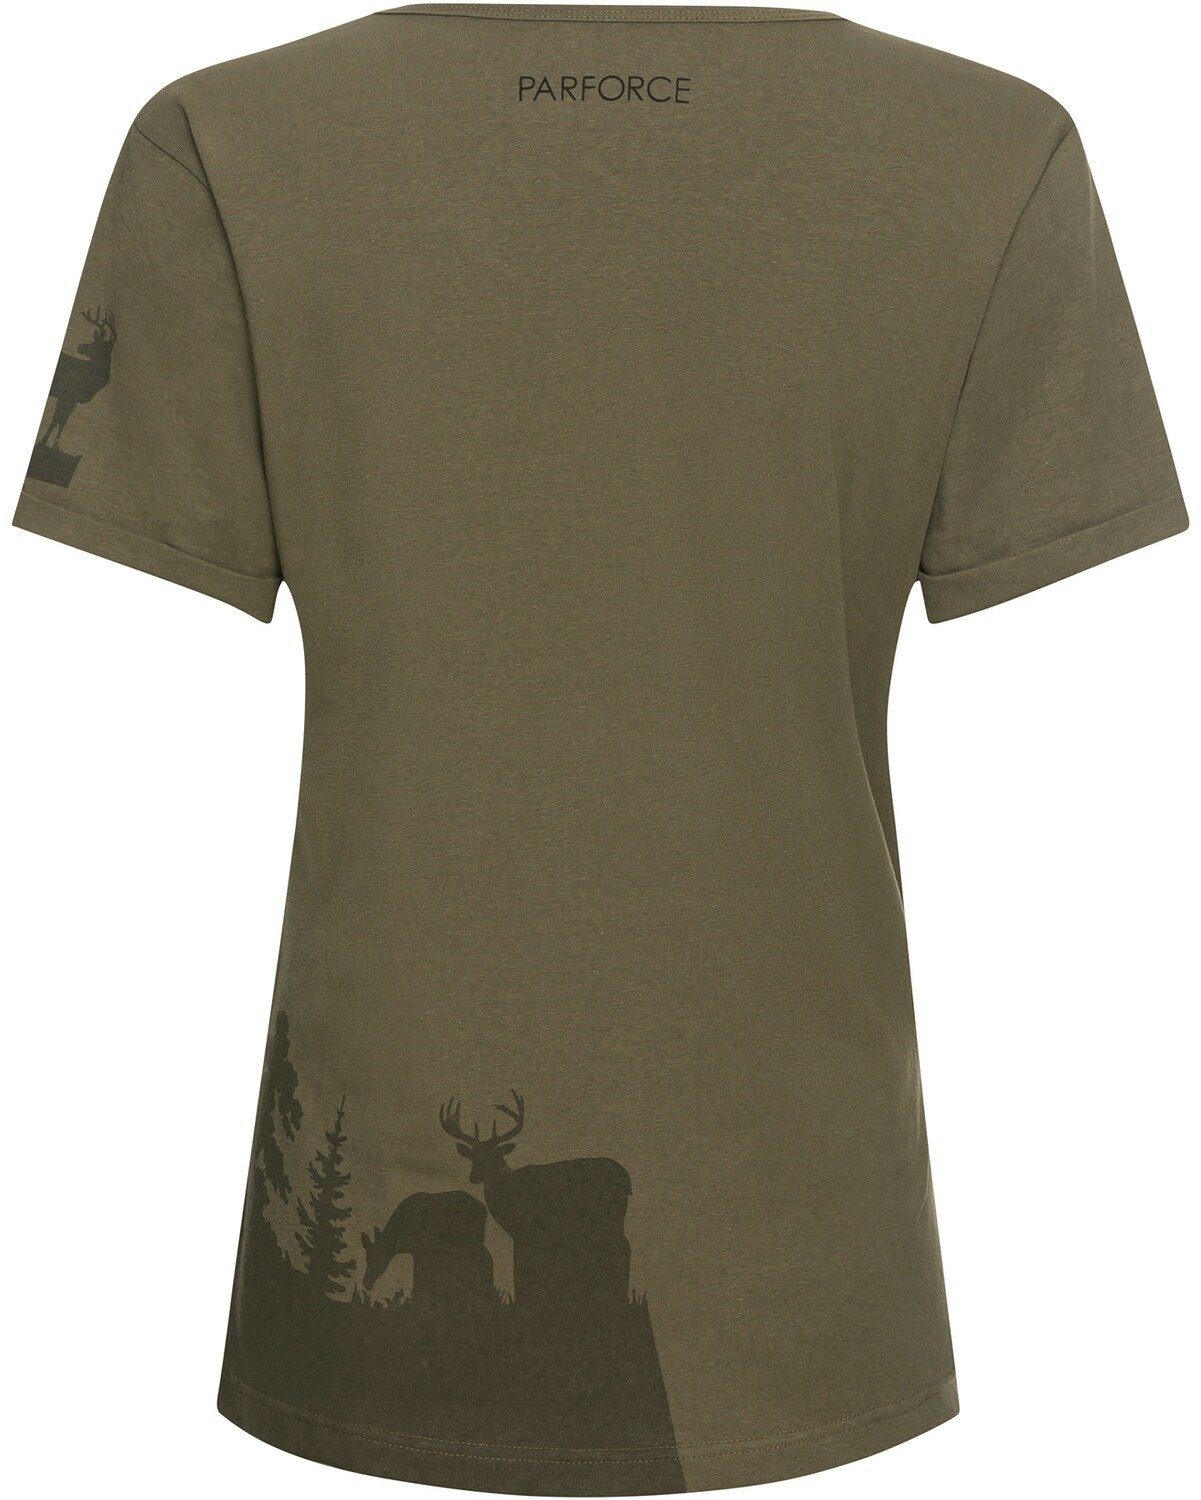 Damen Rotwild Parforce T-Shirt Silhouette T-Shirt